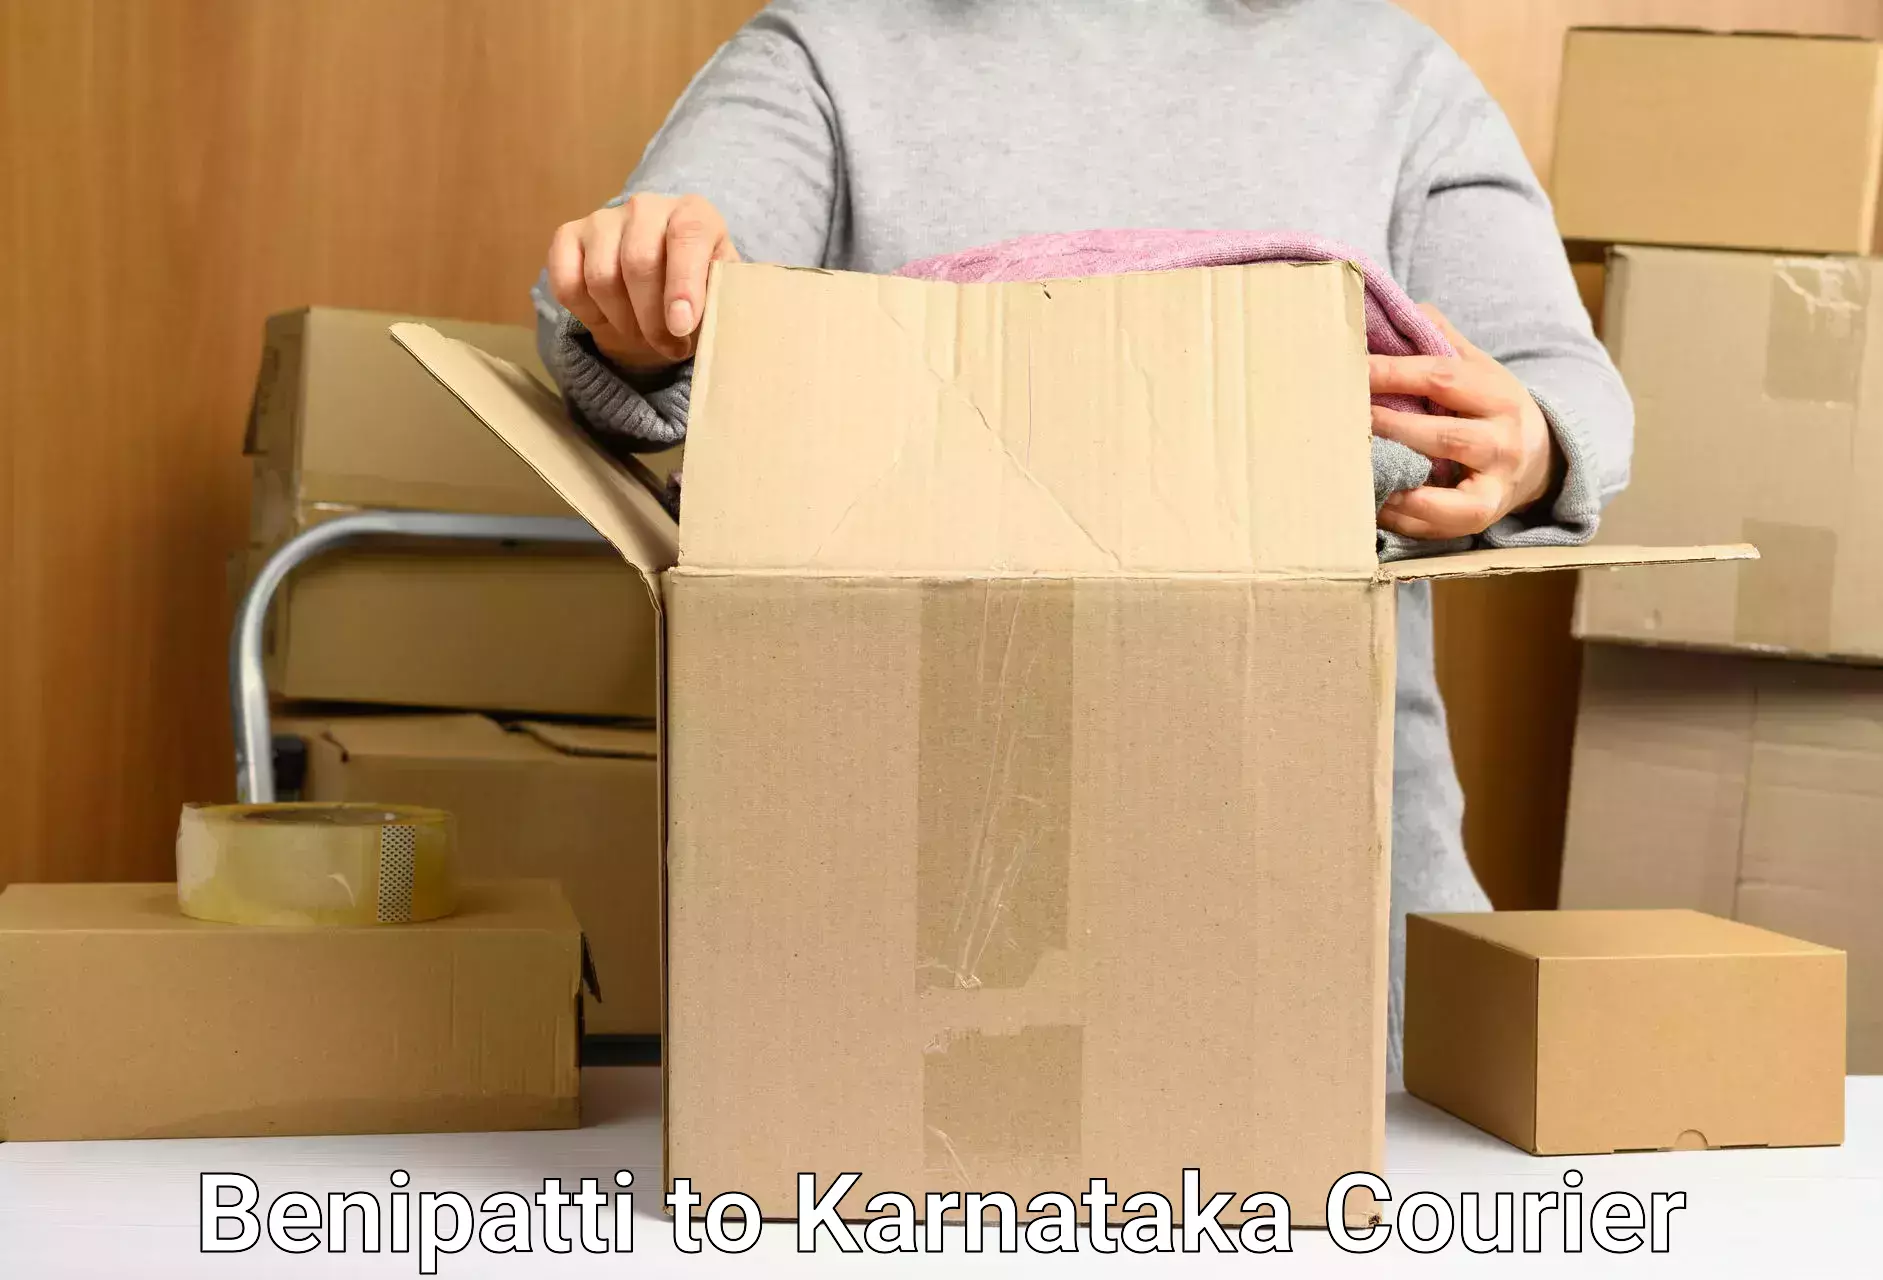 Flexible delivery schedules Benipatti to Karnataka